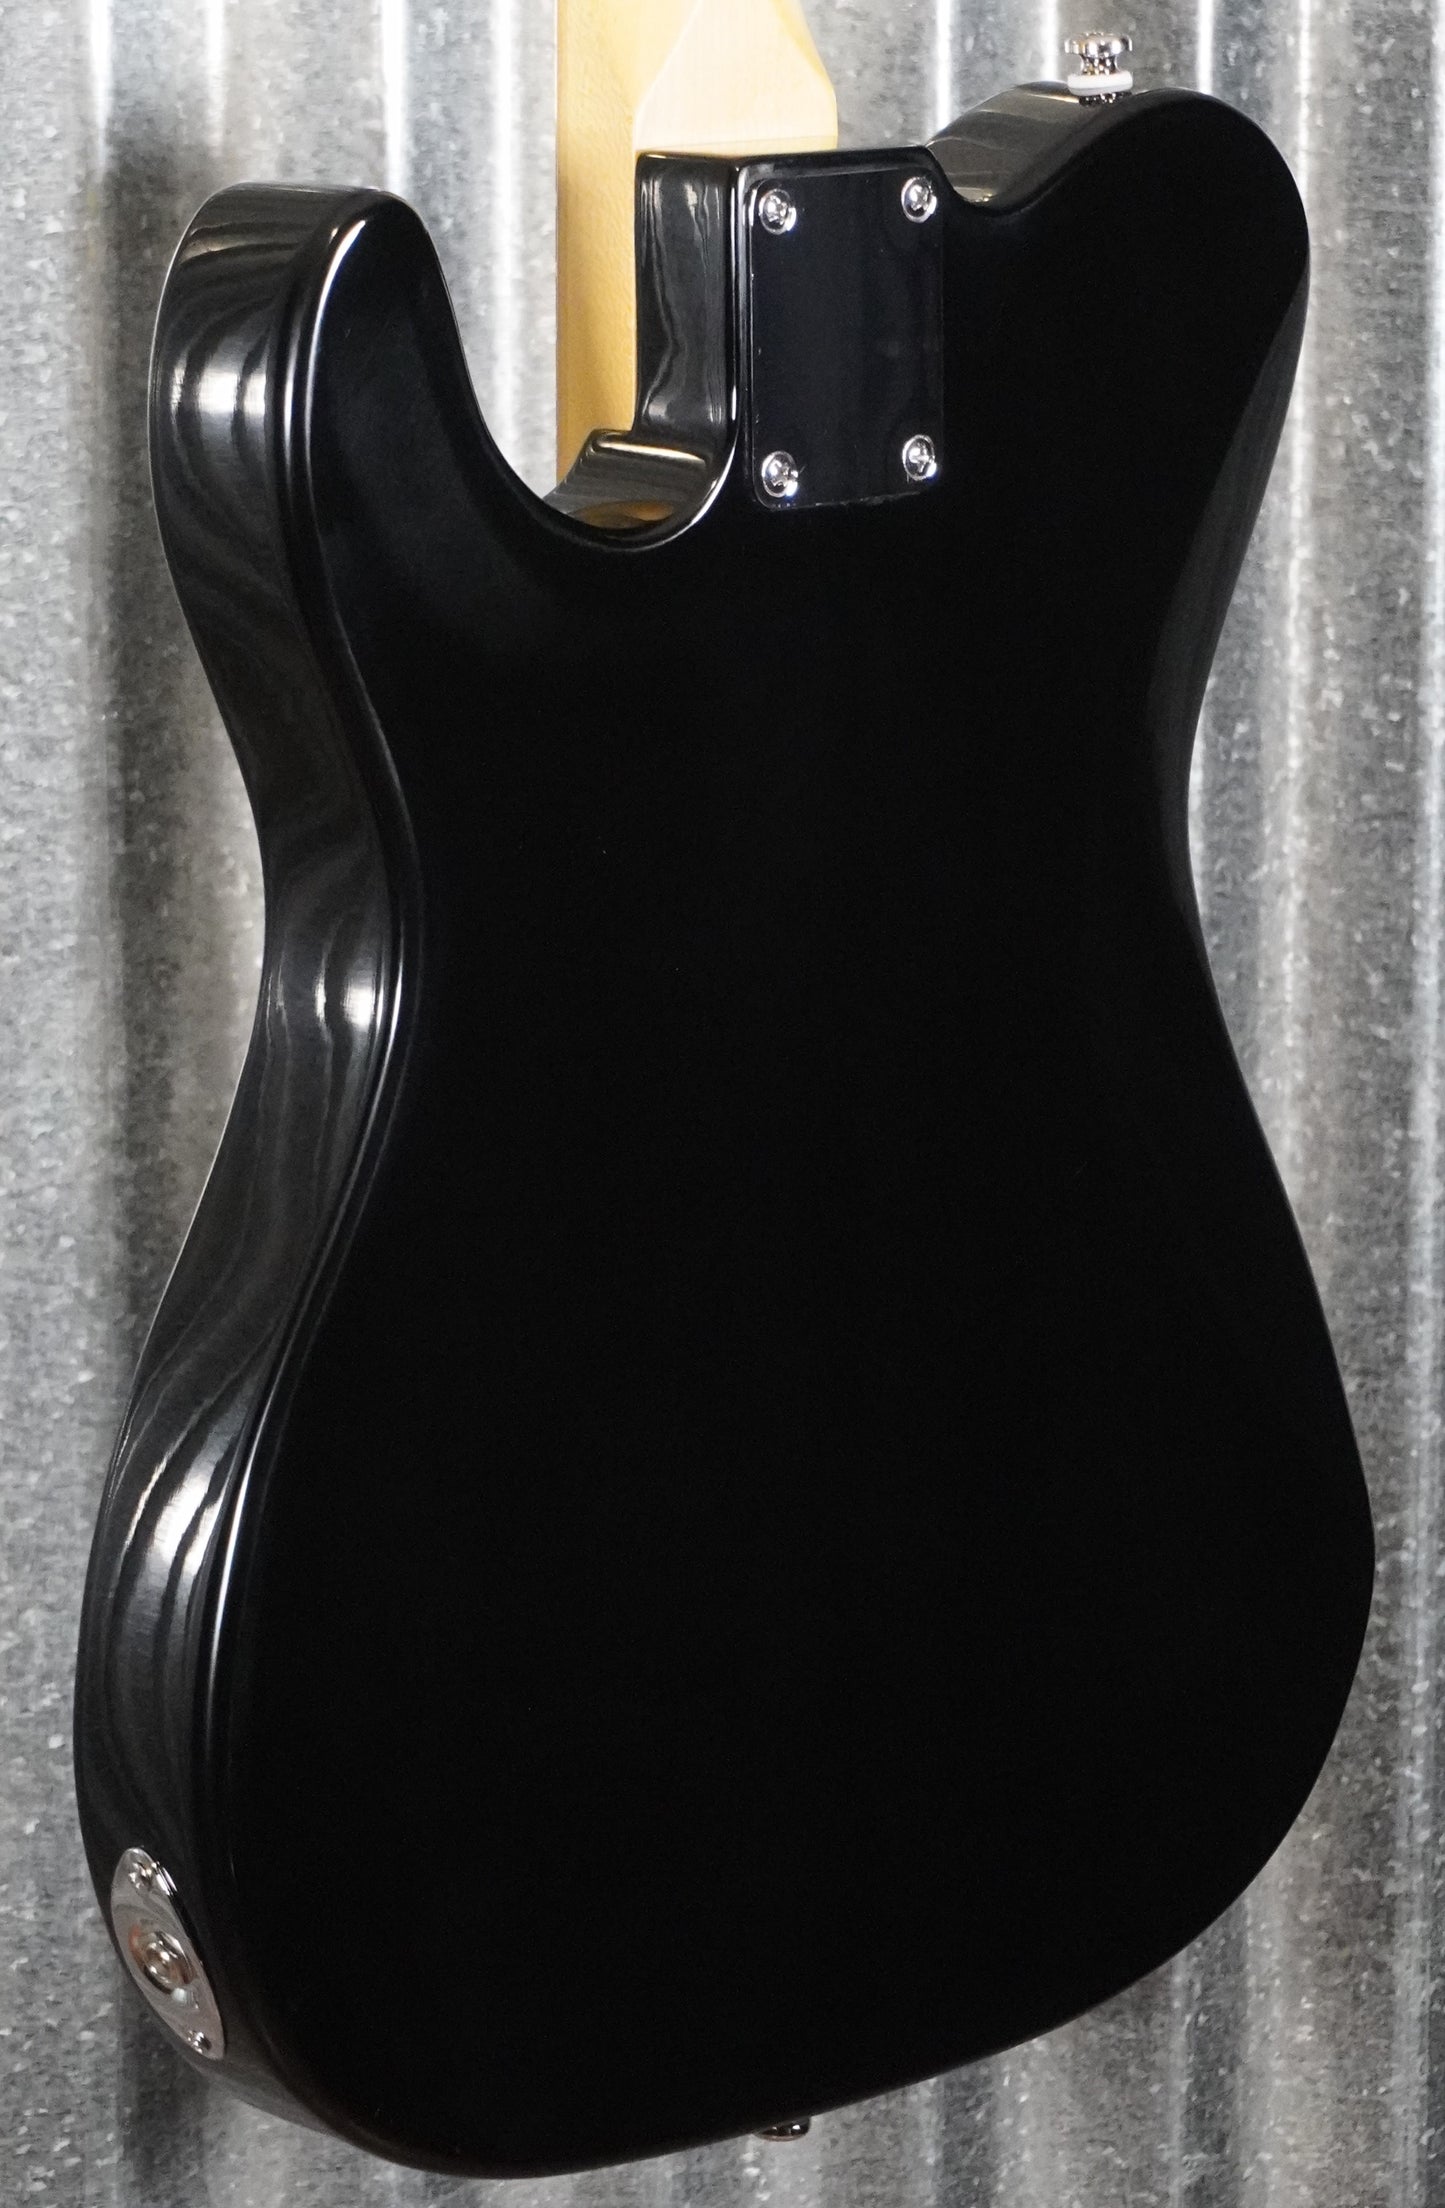 G&L Tribute ASAT Special Poplar Gloss Black Guitar Blem #7049